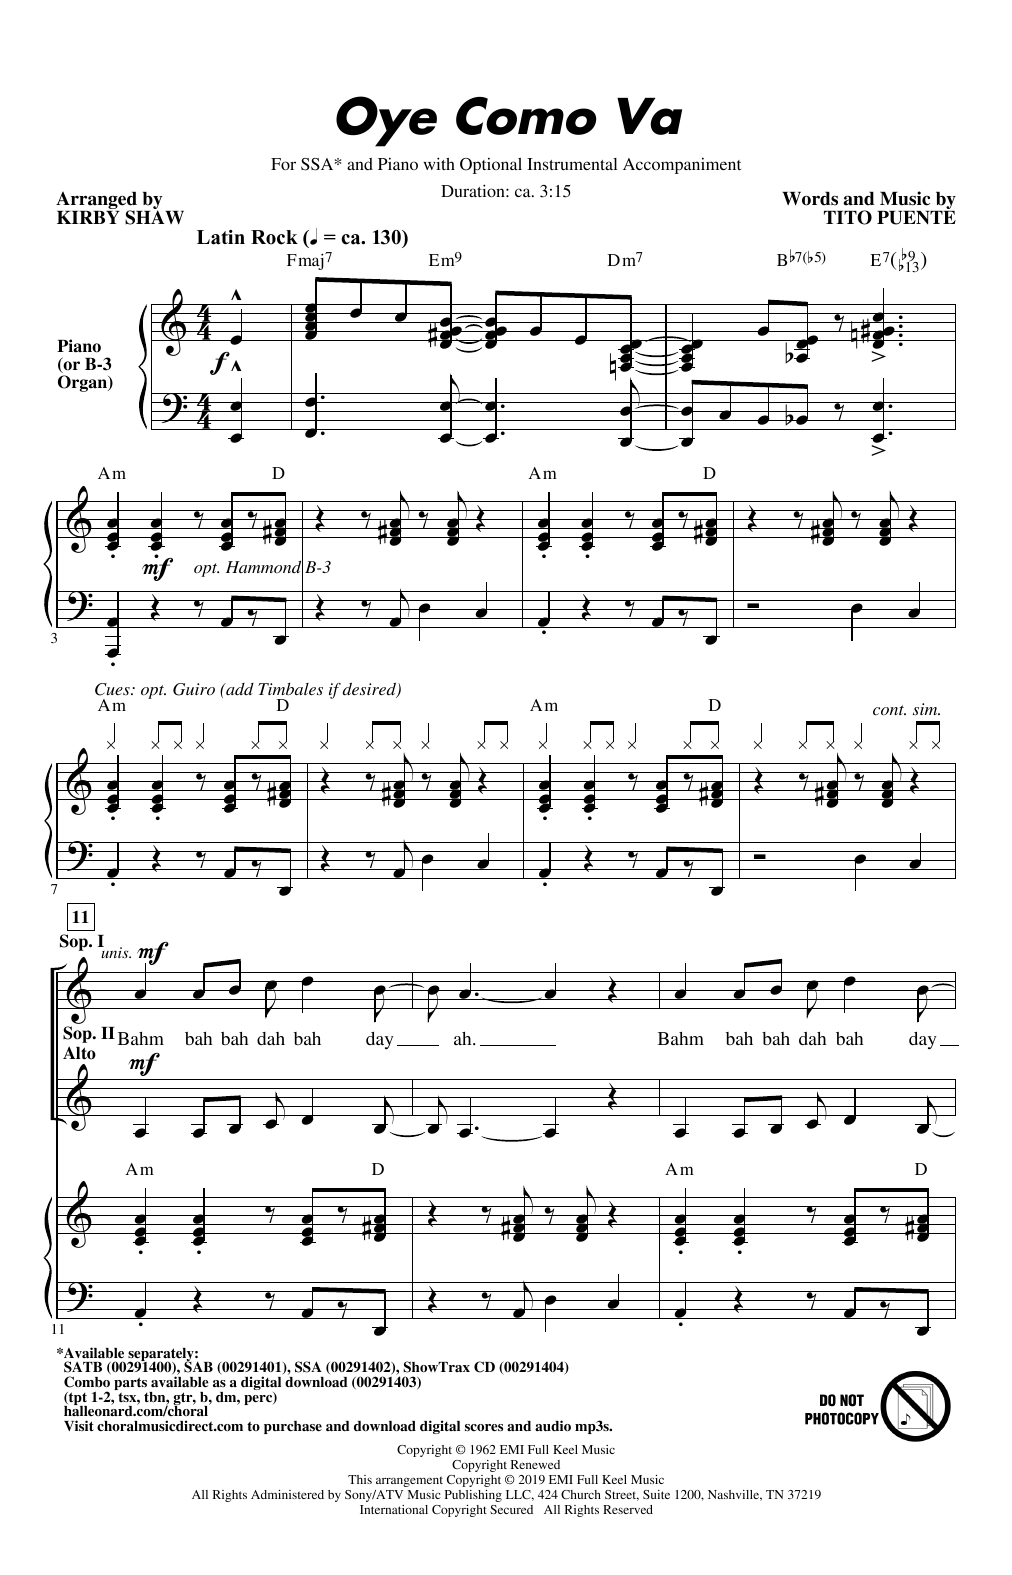 Santana Oye Como Va (arr. Kirby Shaw) Sheet Music Notes & Chords for SAB Choir - Download or Print PDF